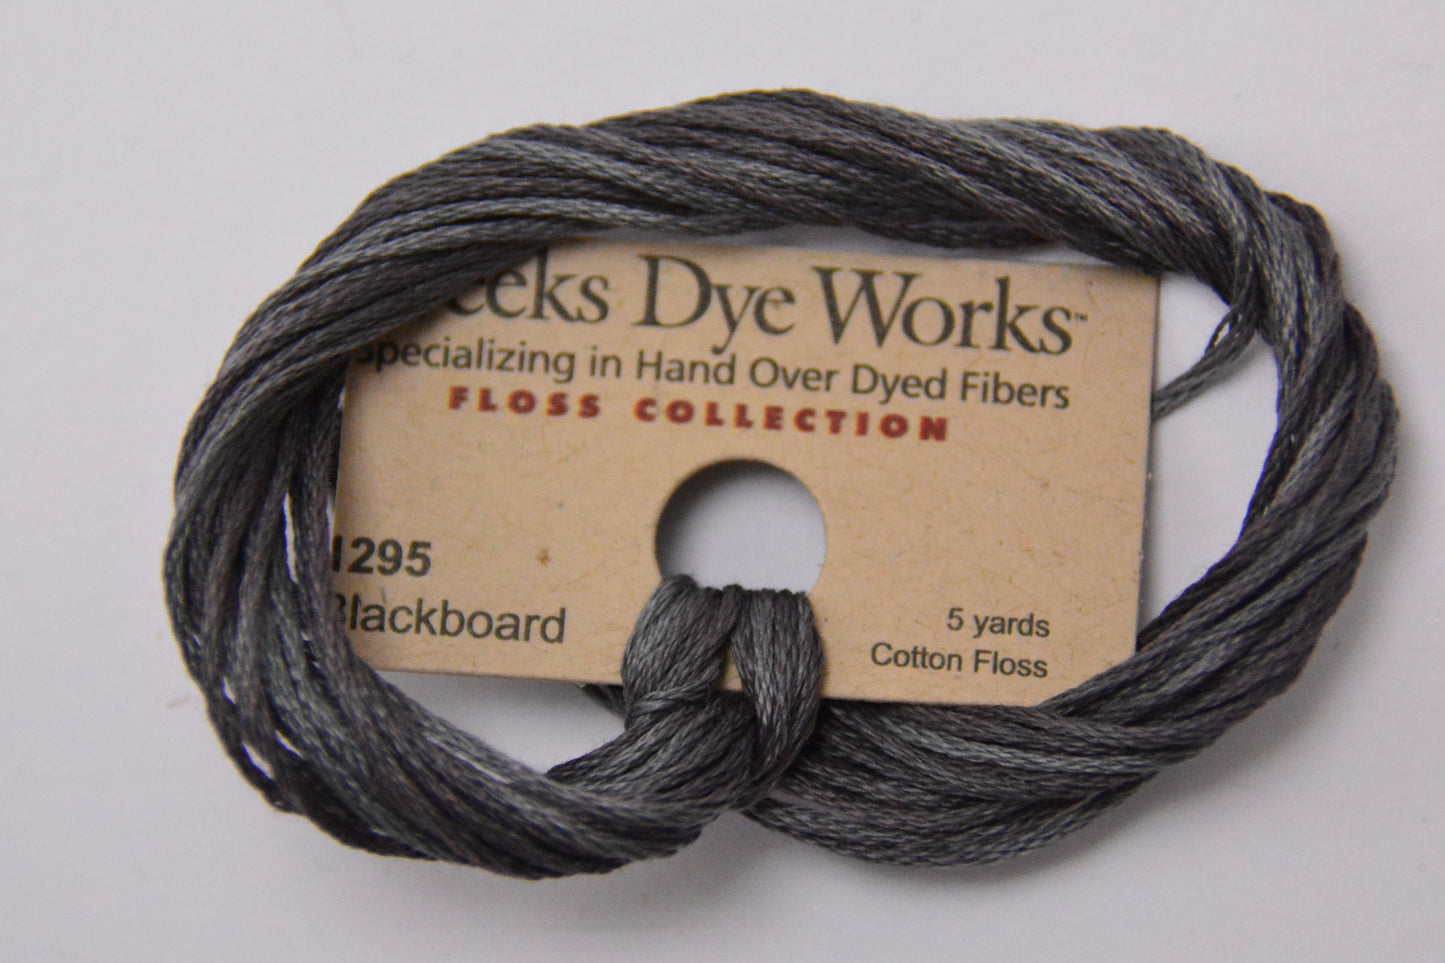 Blackboard 1295 Weeks Dye Works 6-Strand Hand-Dyed Embroidery Floss